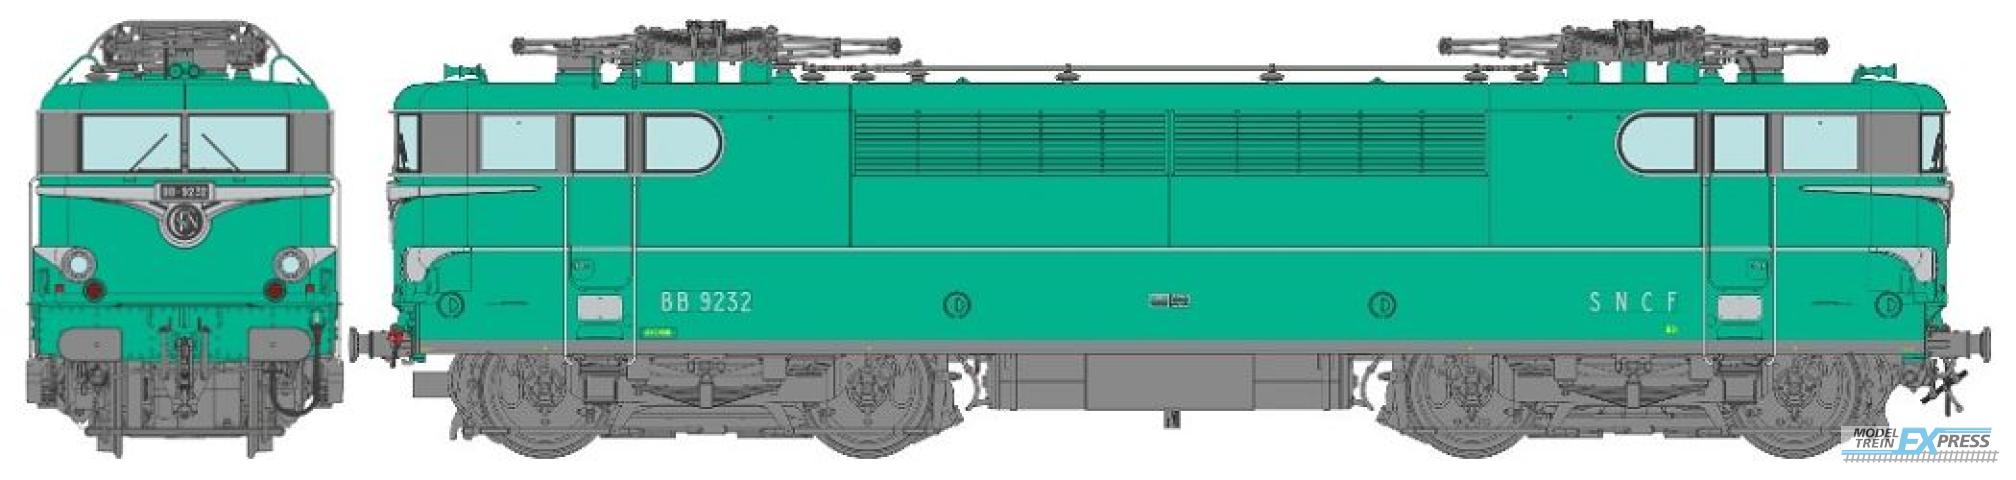 REE models MB-083SAC BB 9232 Green, Paris-SO without Skirt, Red Ligth Era IV-V - AC Sound Functional Pantos (3 tracks)